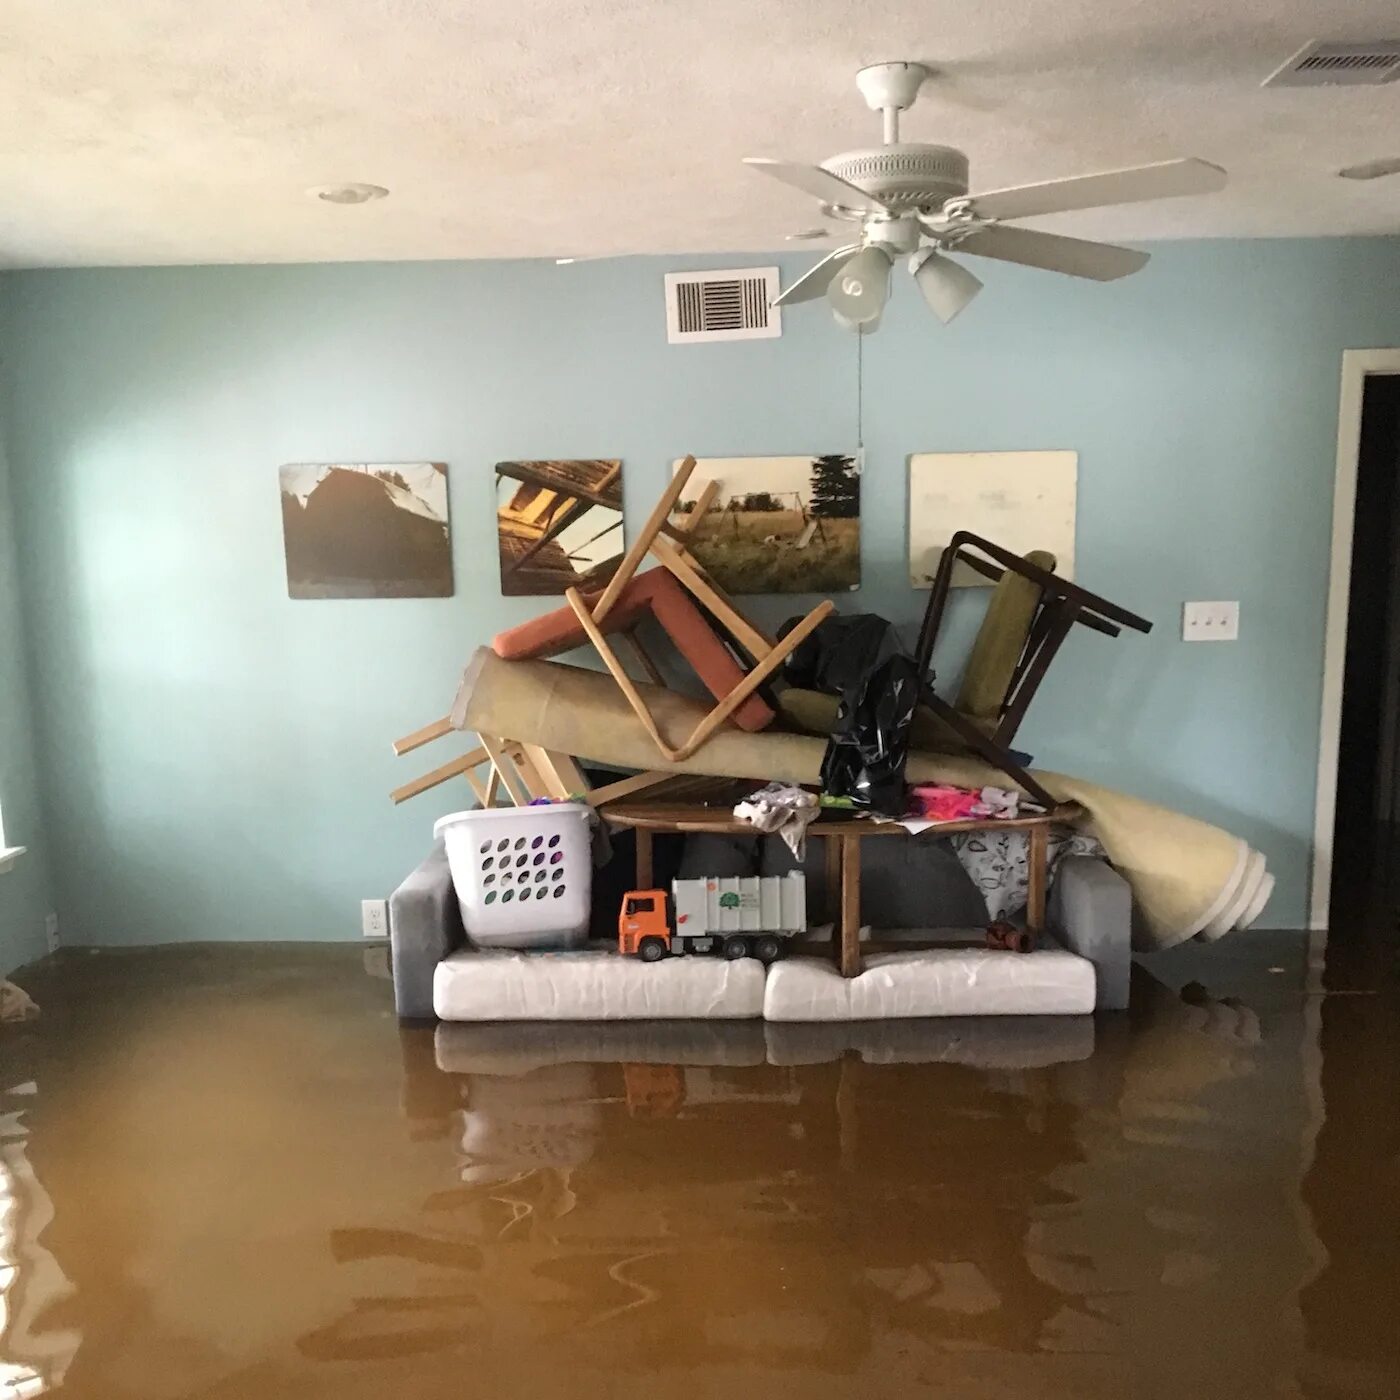 Сонник затапливает квартиру. Затопило квартиру. Потоп в квартире. Затопленная комната. Залив квартиры.